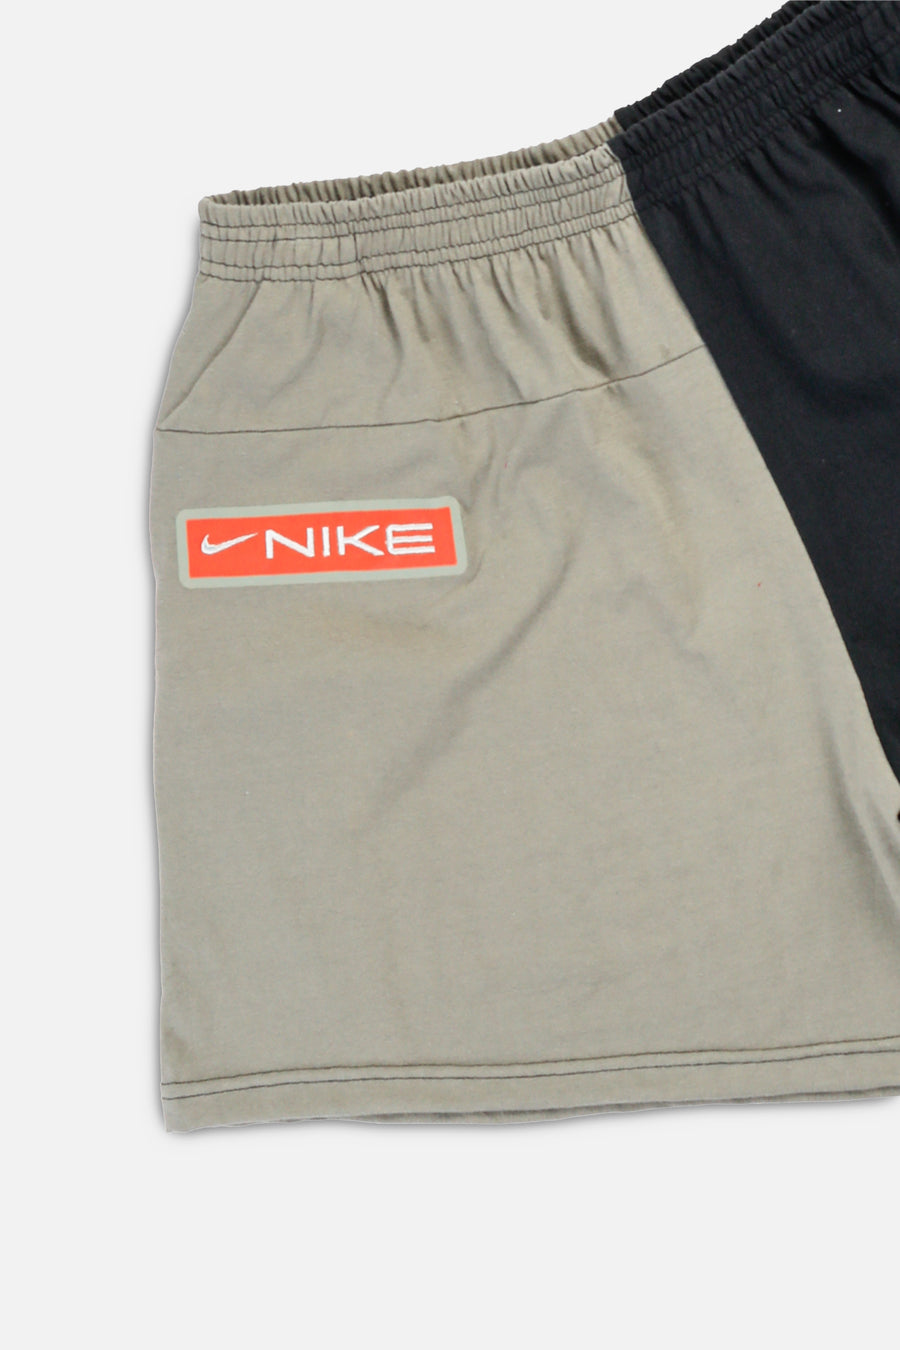 Unisex Rework Nike Tee Shorts - XXL